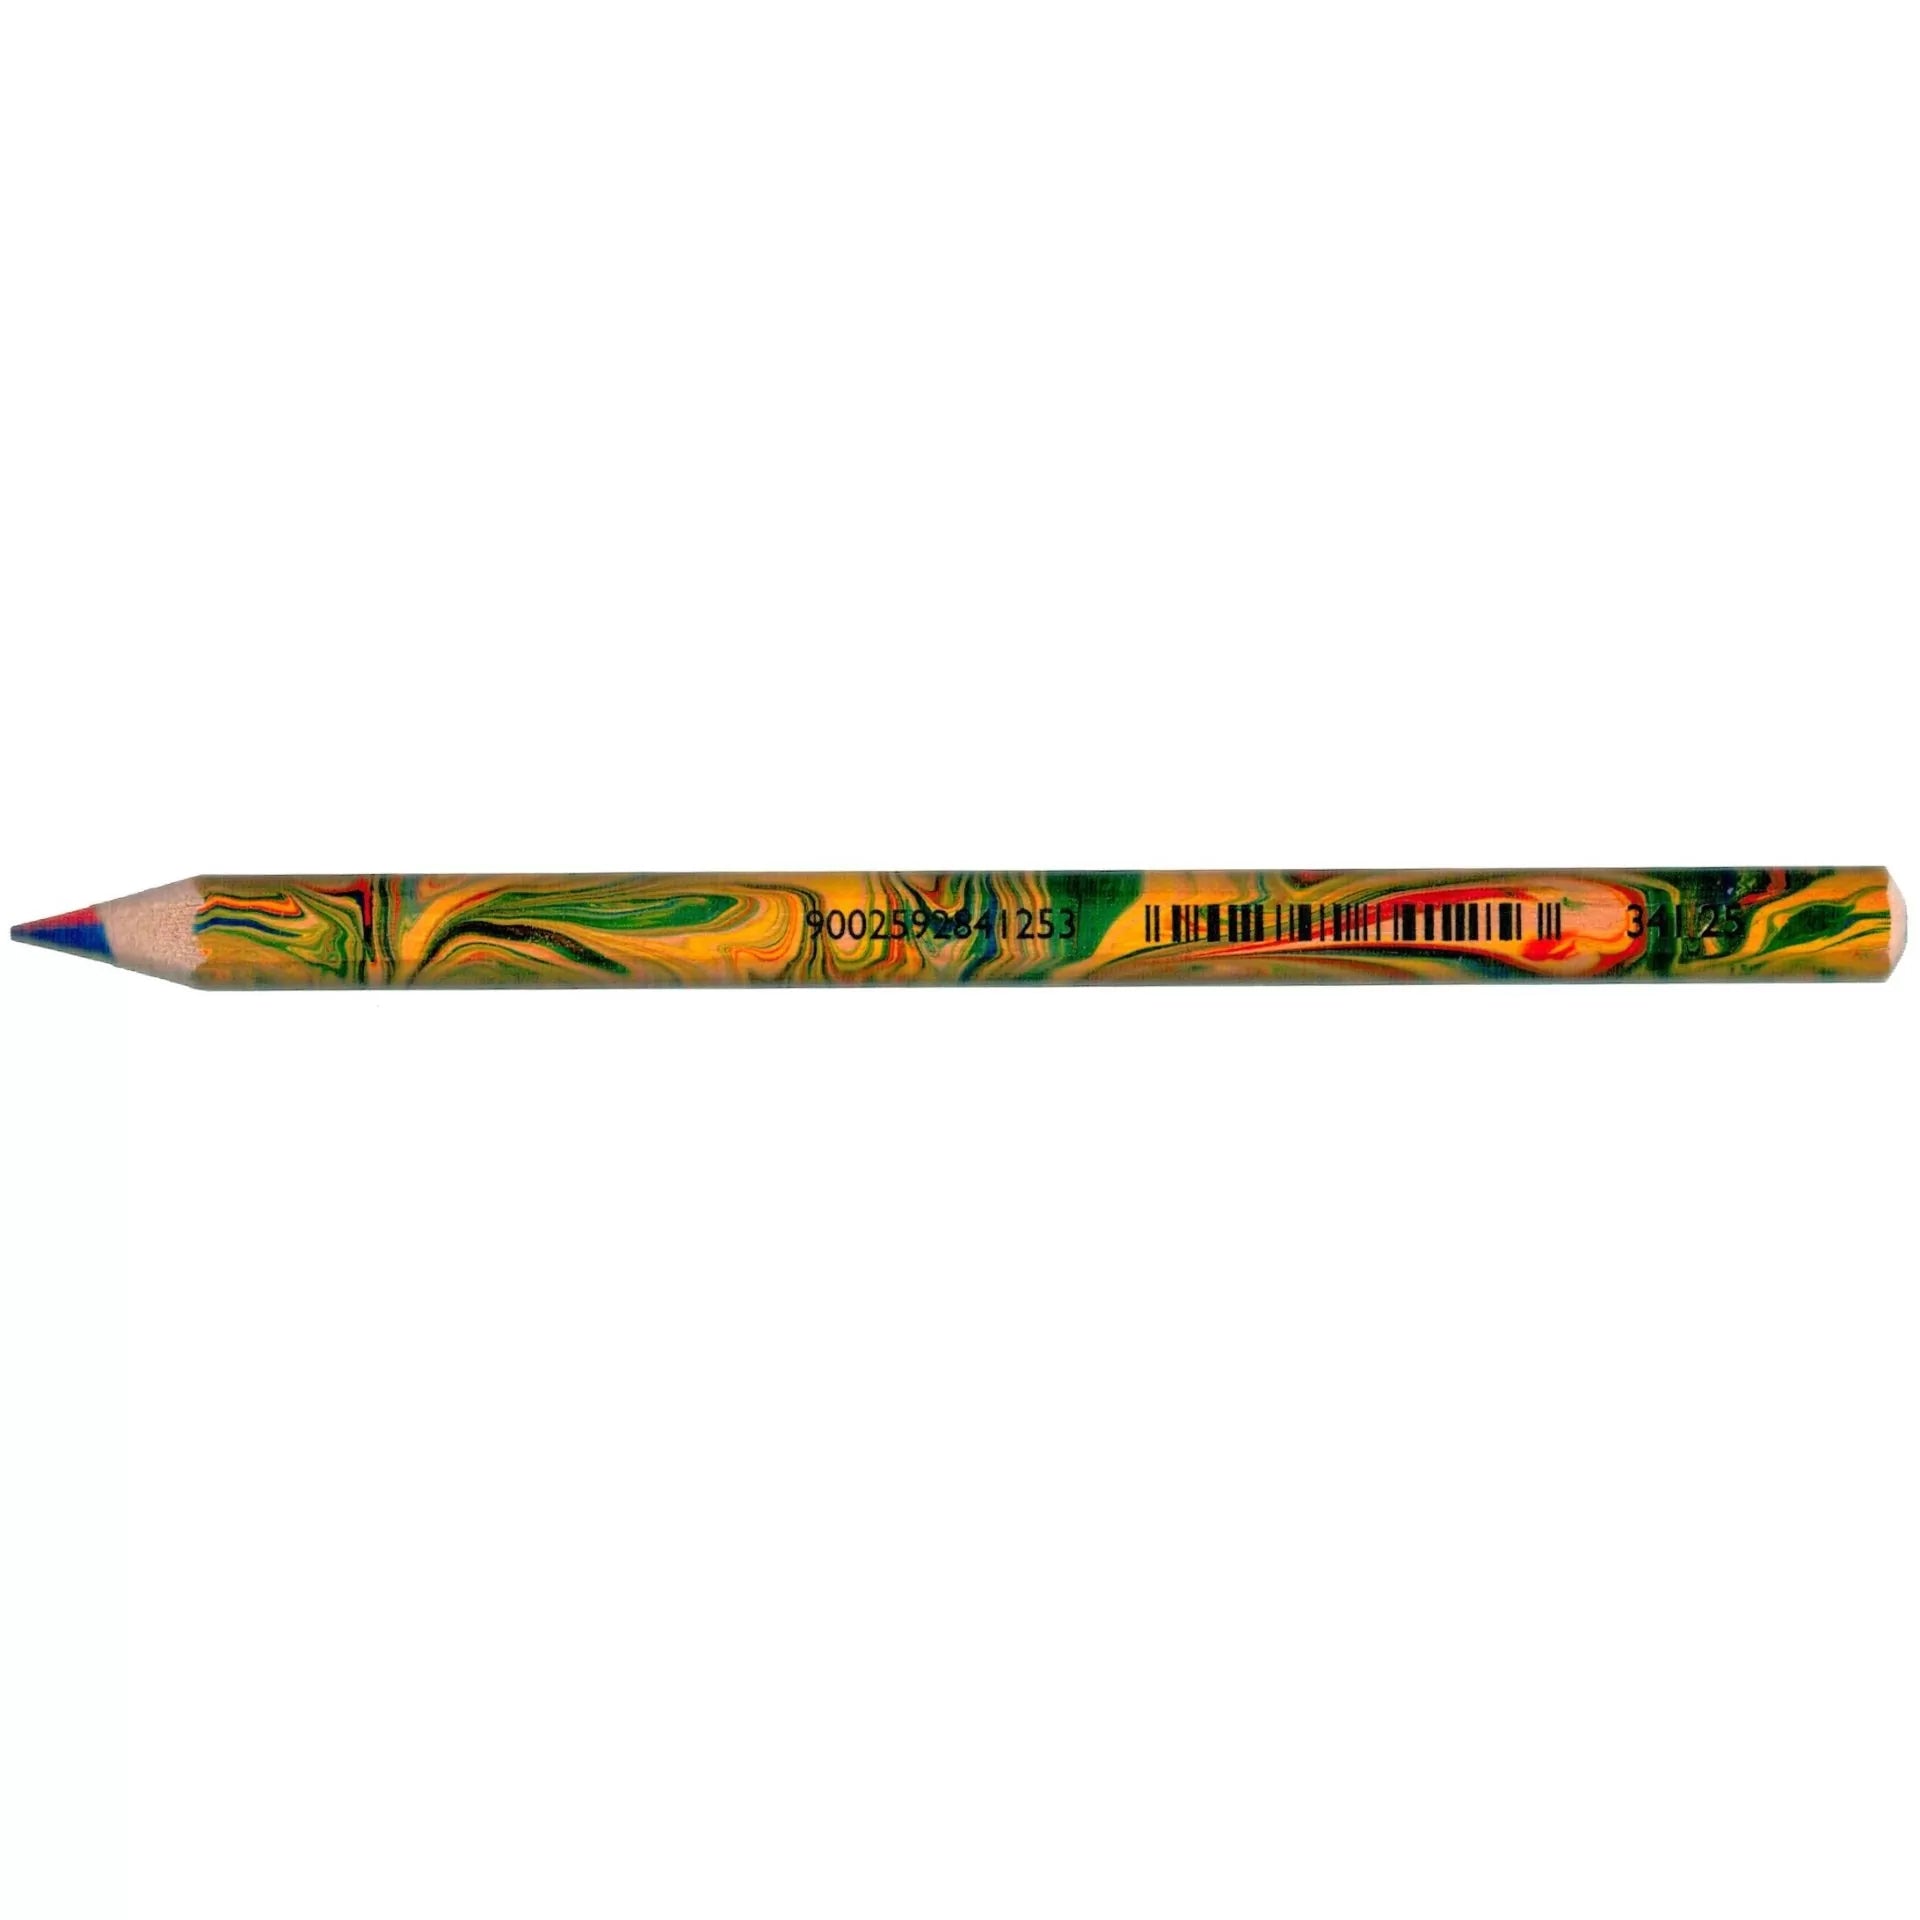 Cretacolor Mega 4 Color Rainbow Aqua Pencil Single Piece